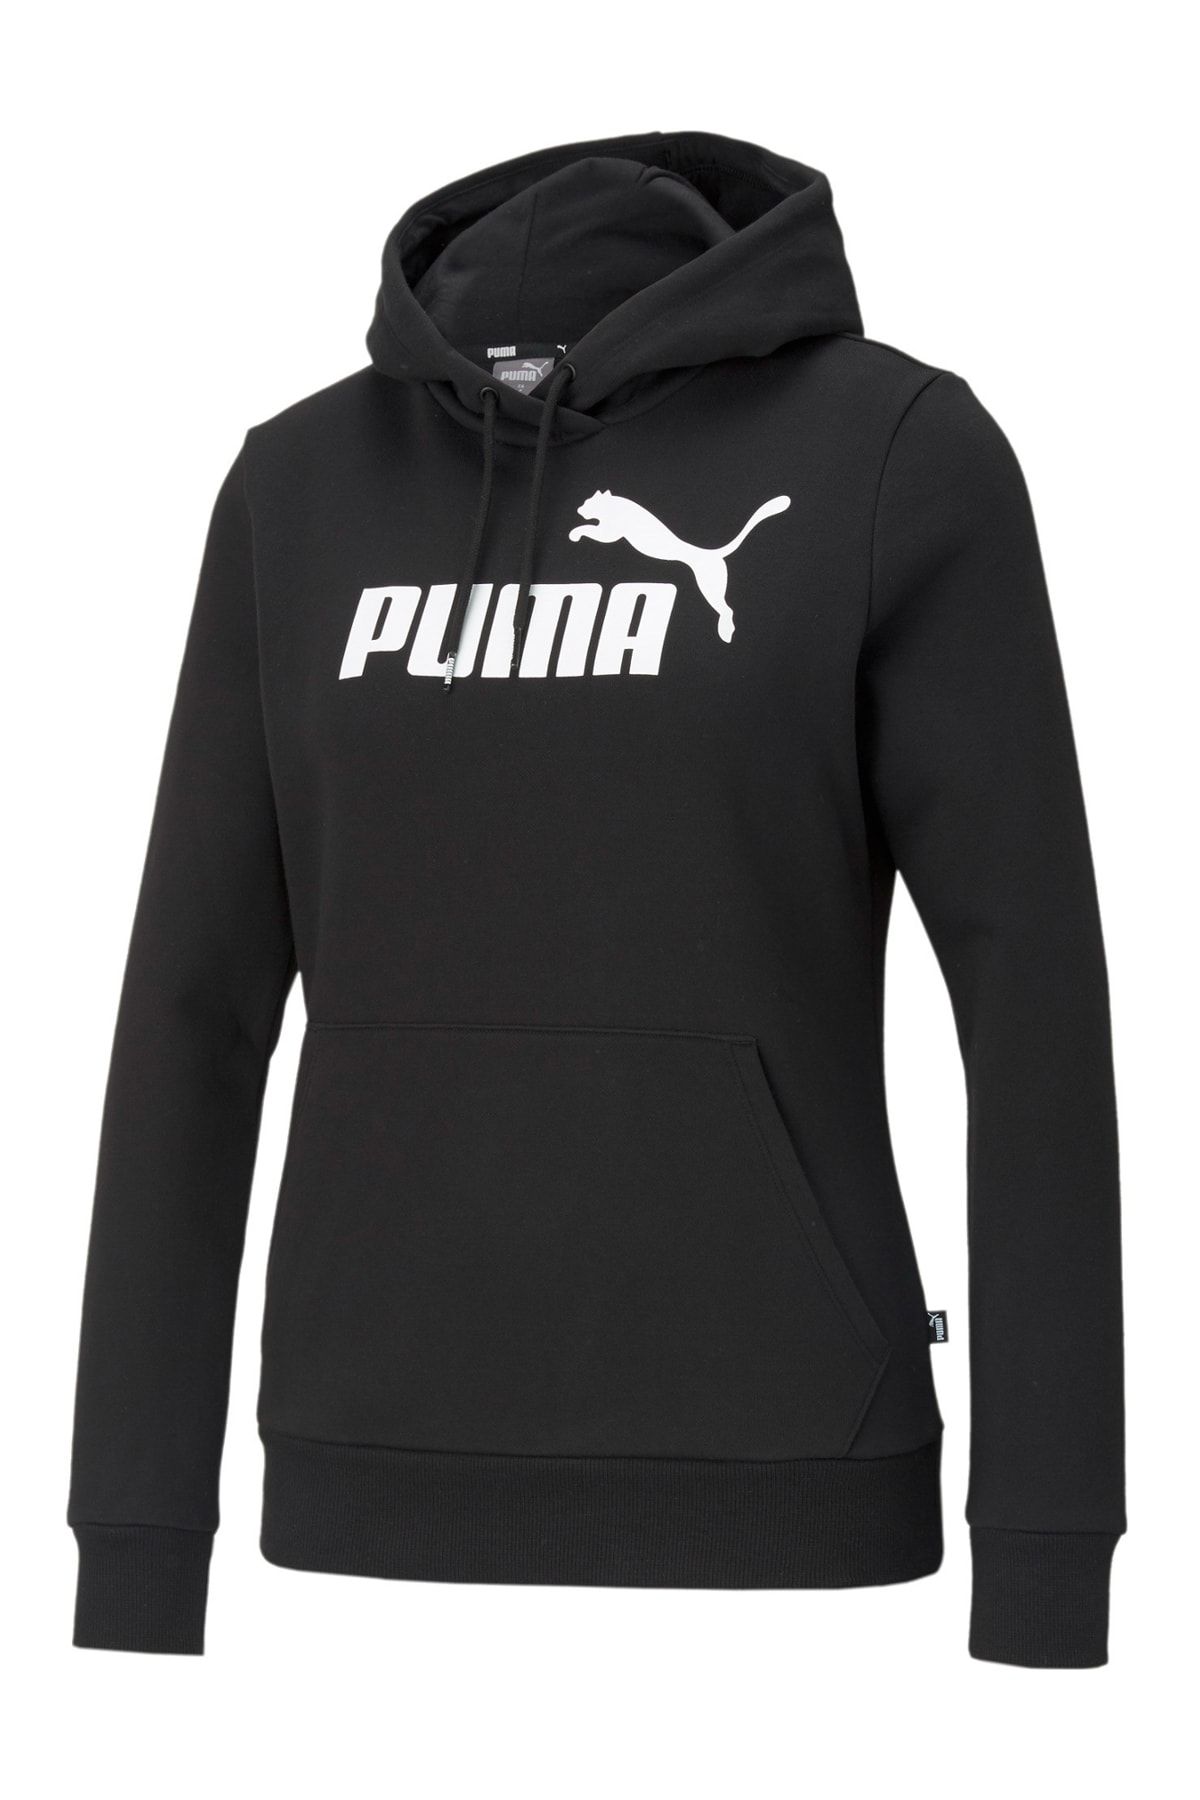 Puma Ess Logo Fl Kadın Sweatshirt 58678801